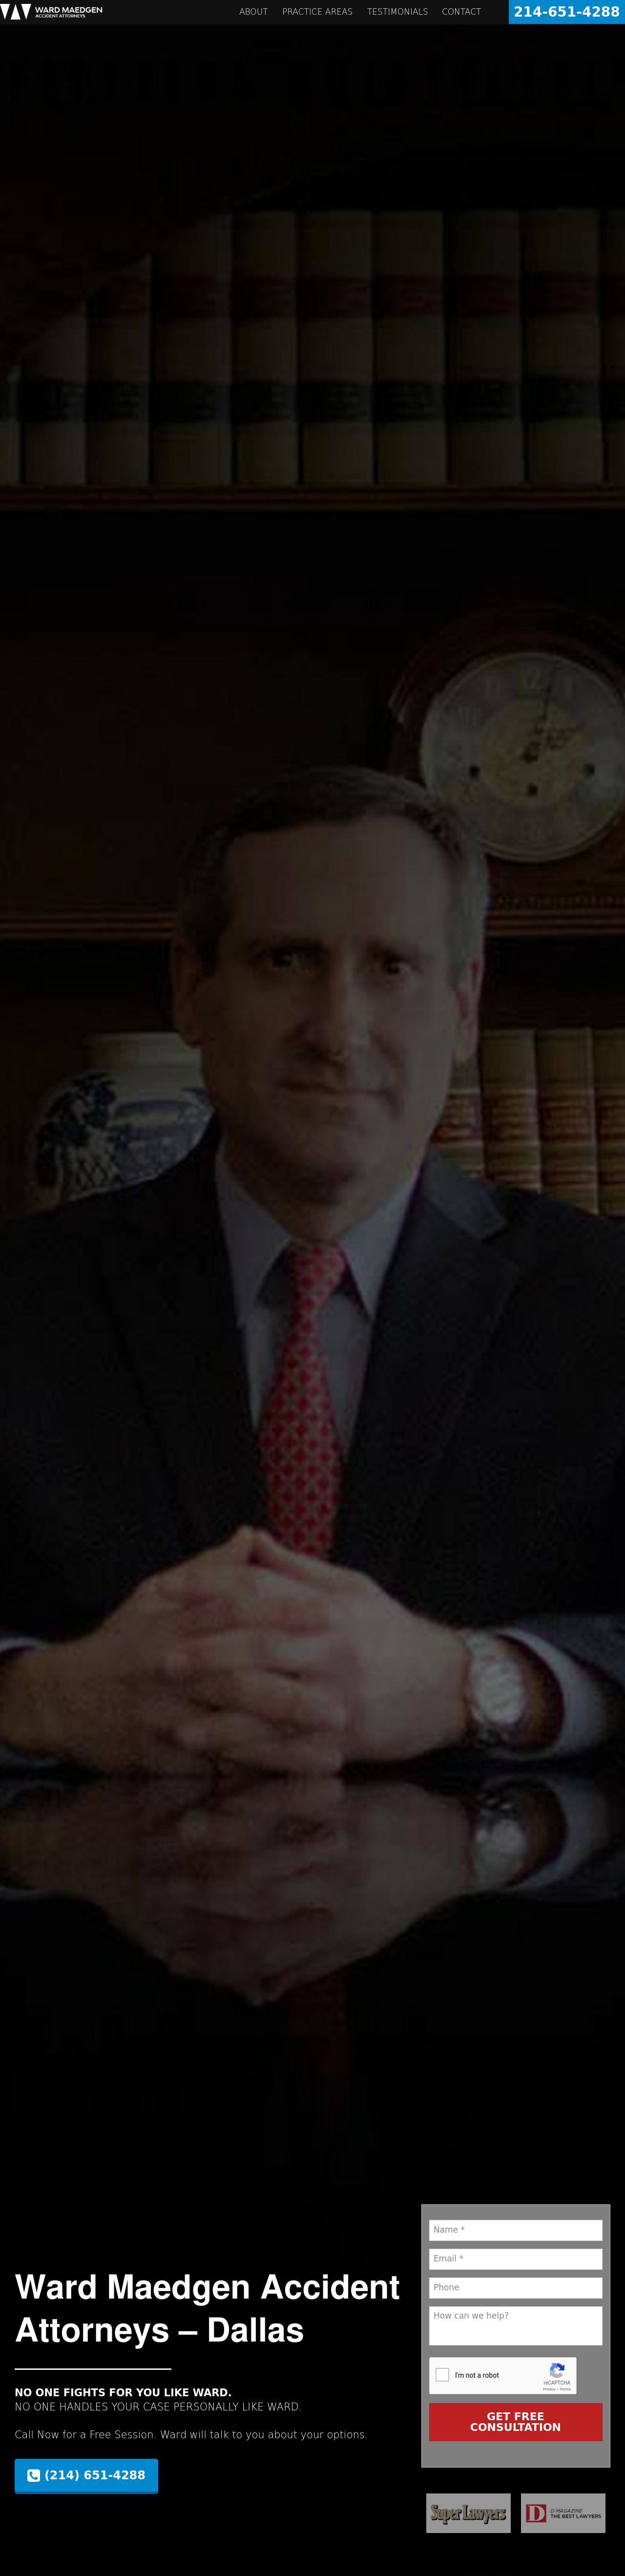 Ward Maedgen Accident Attorneys - Dallas TX Lawyers